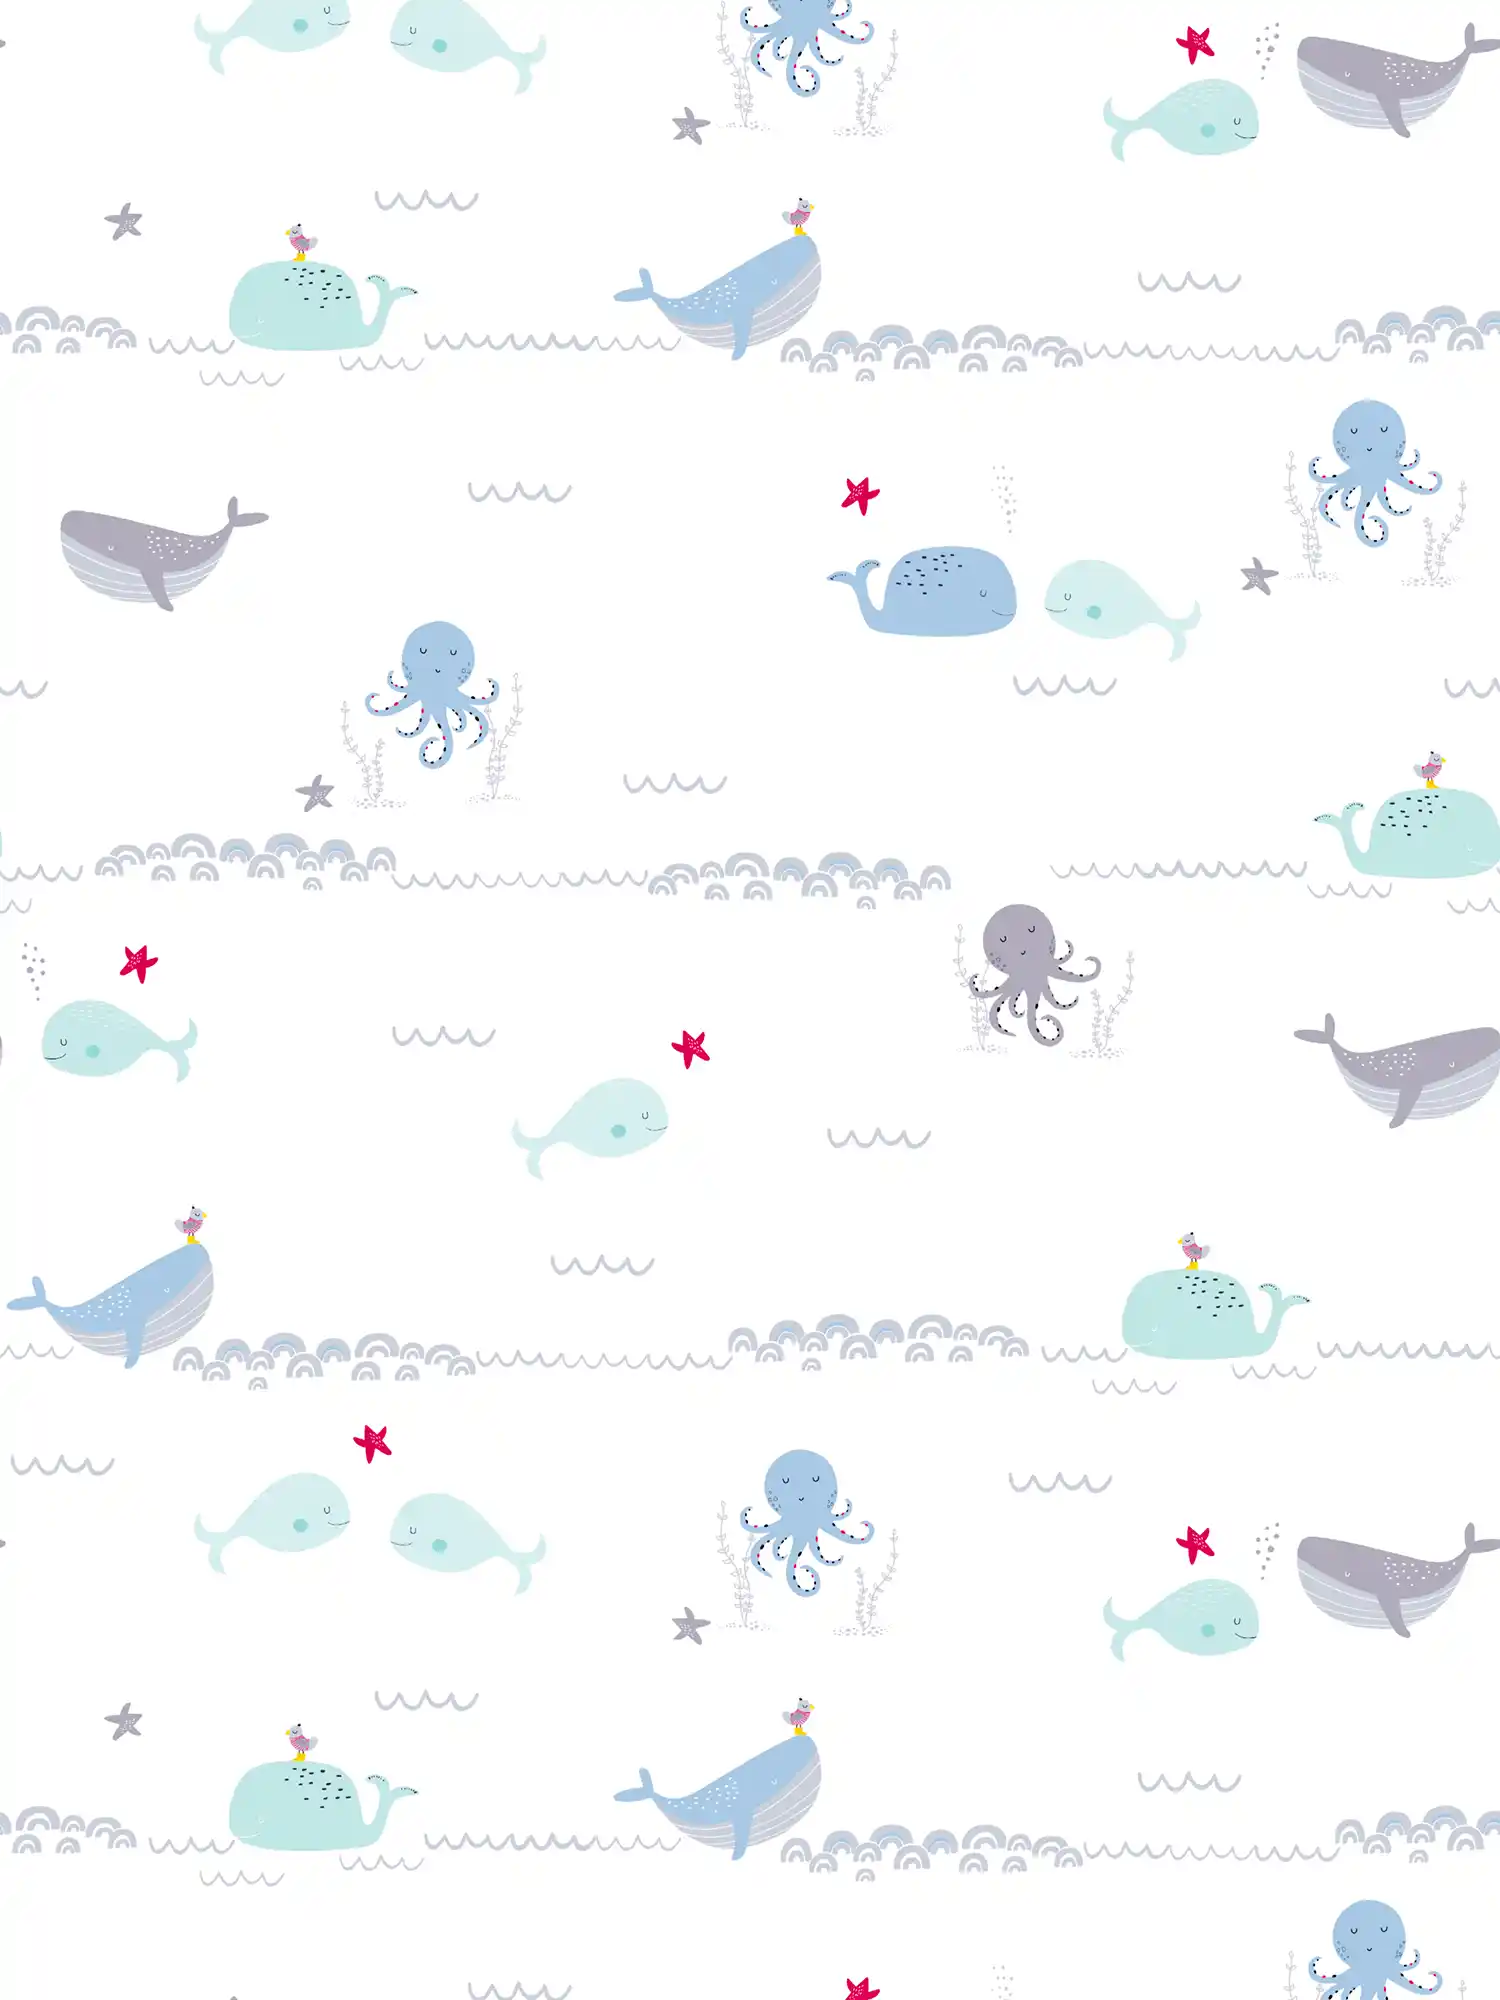         Nursery wallpaper sea animals - blue, grey, white
    